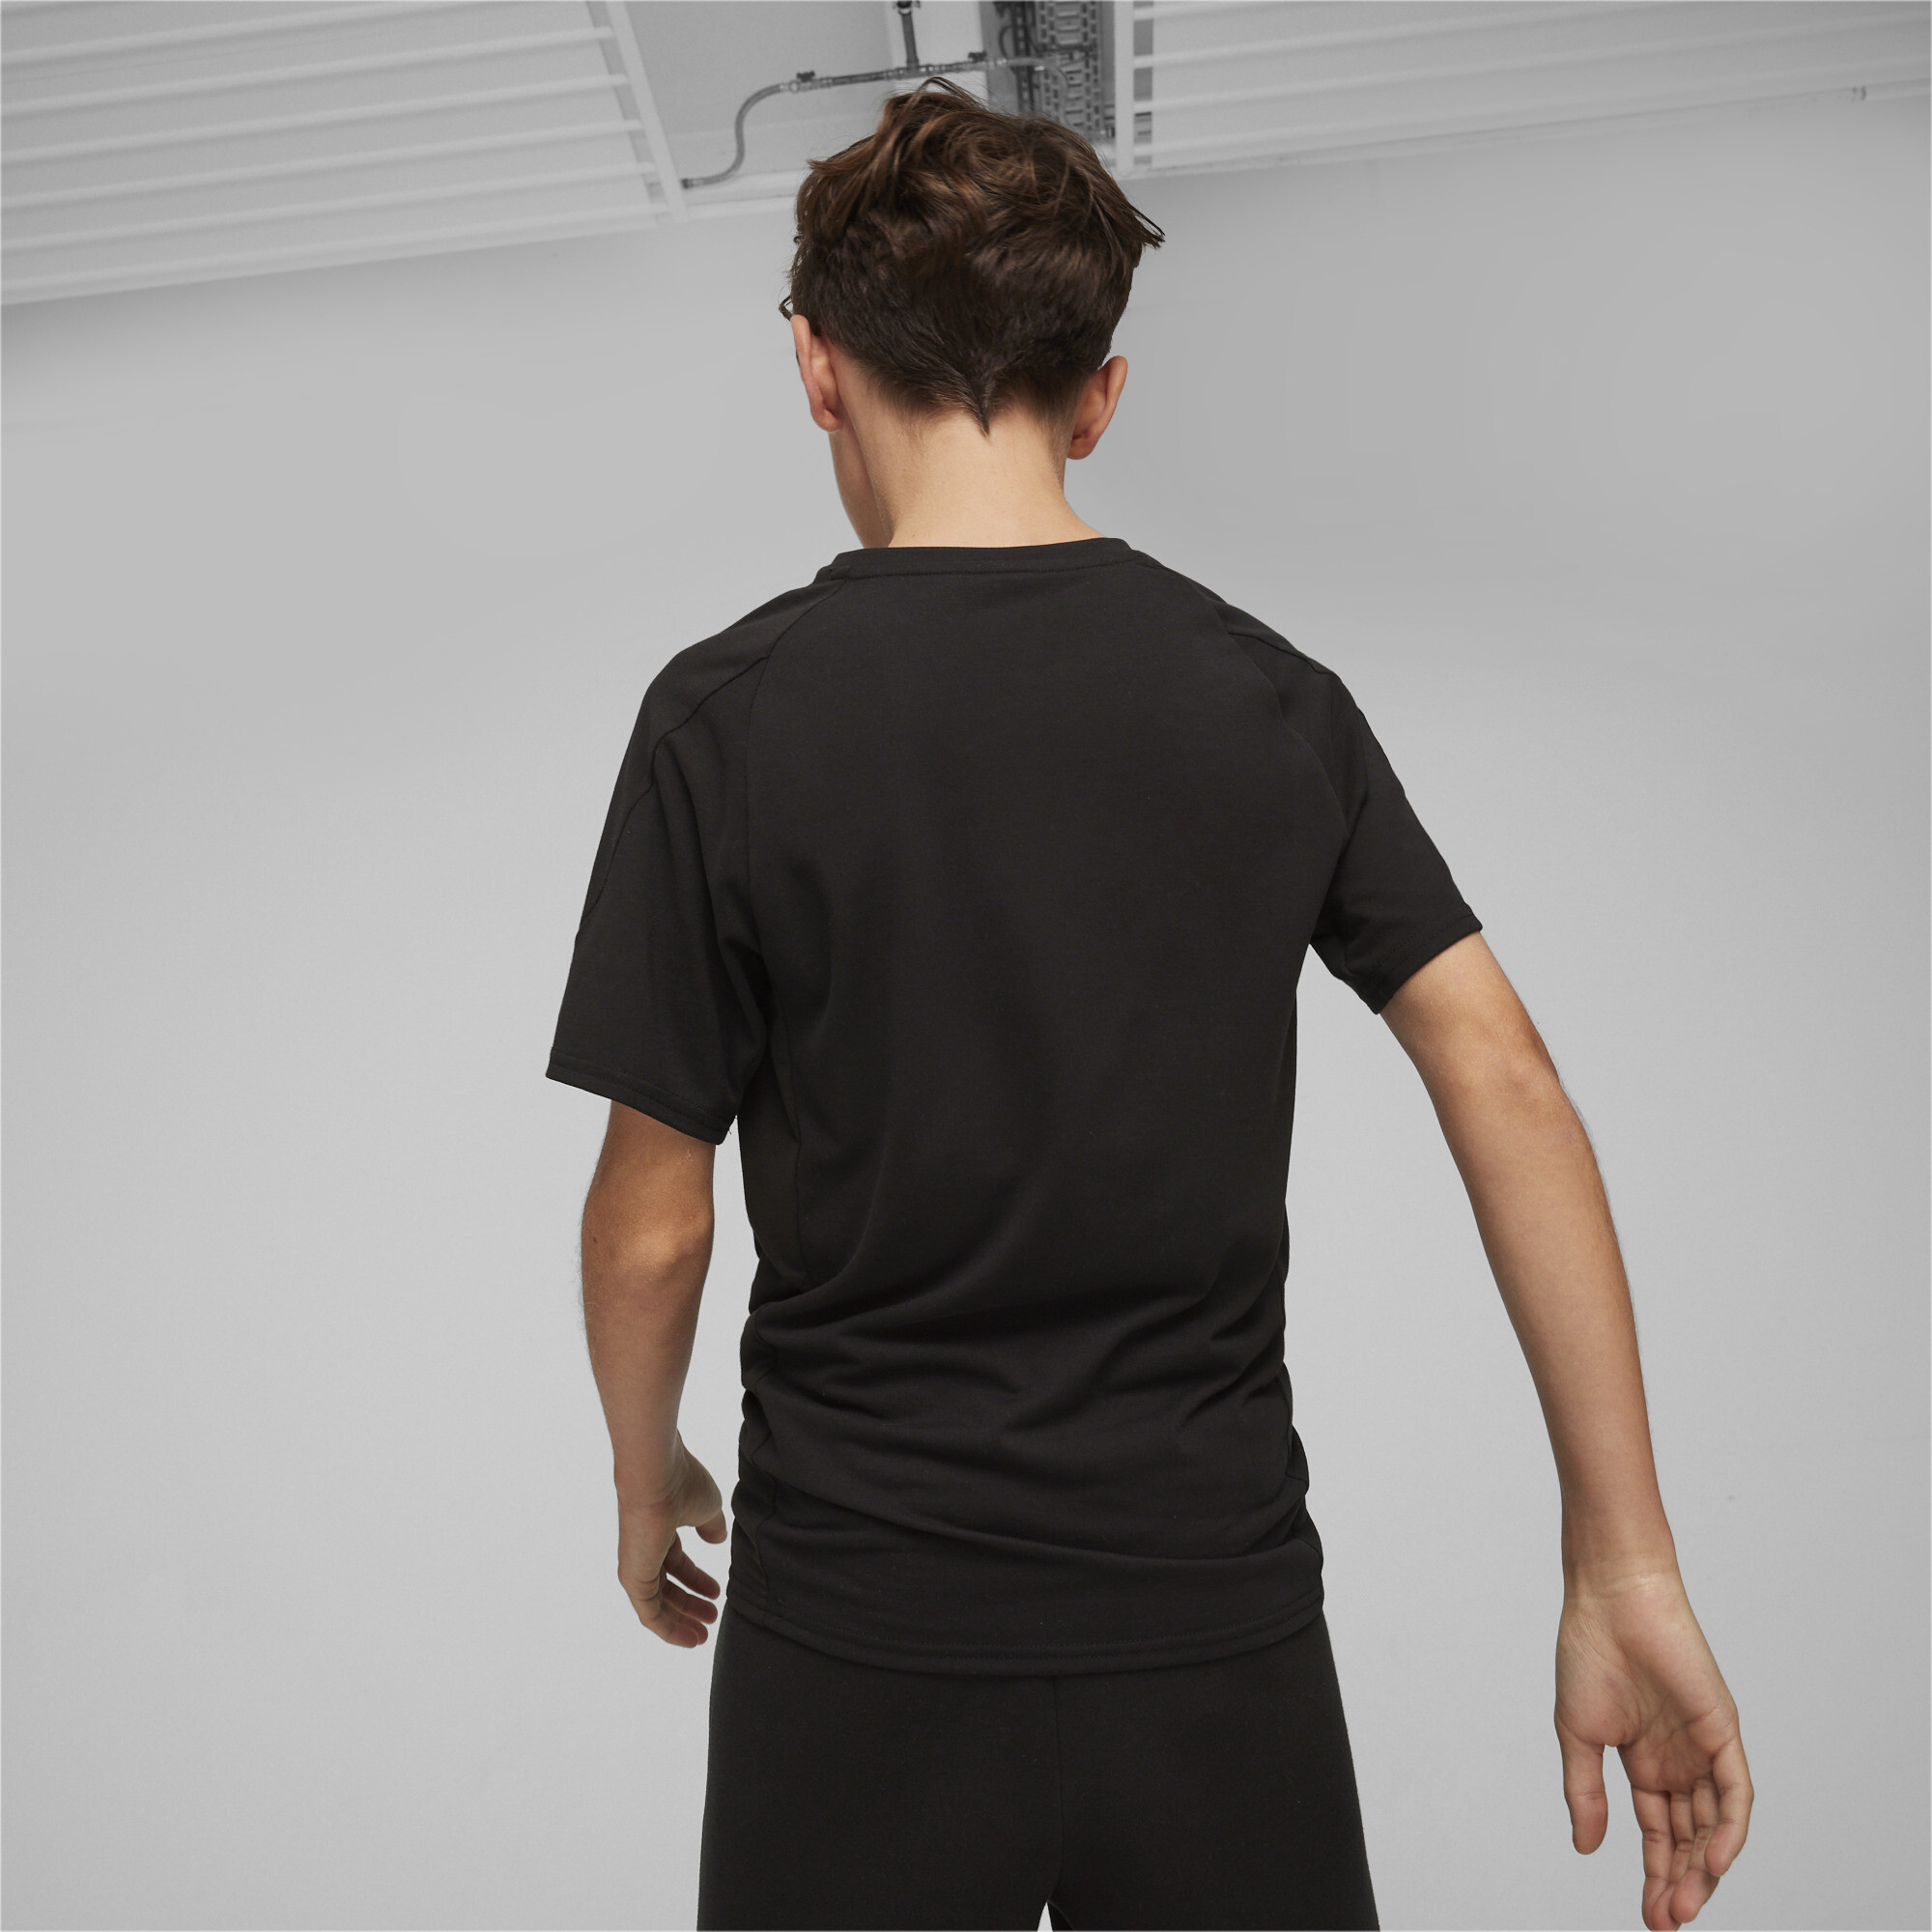 PUMA EVOSTRIPE T-Shirt In Black, Size 15-16 Youth